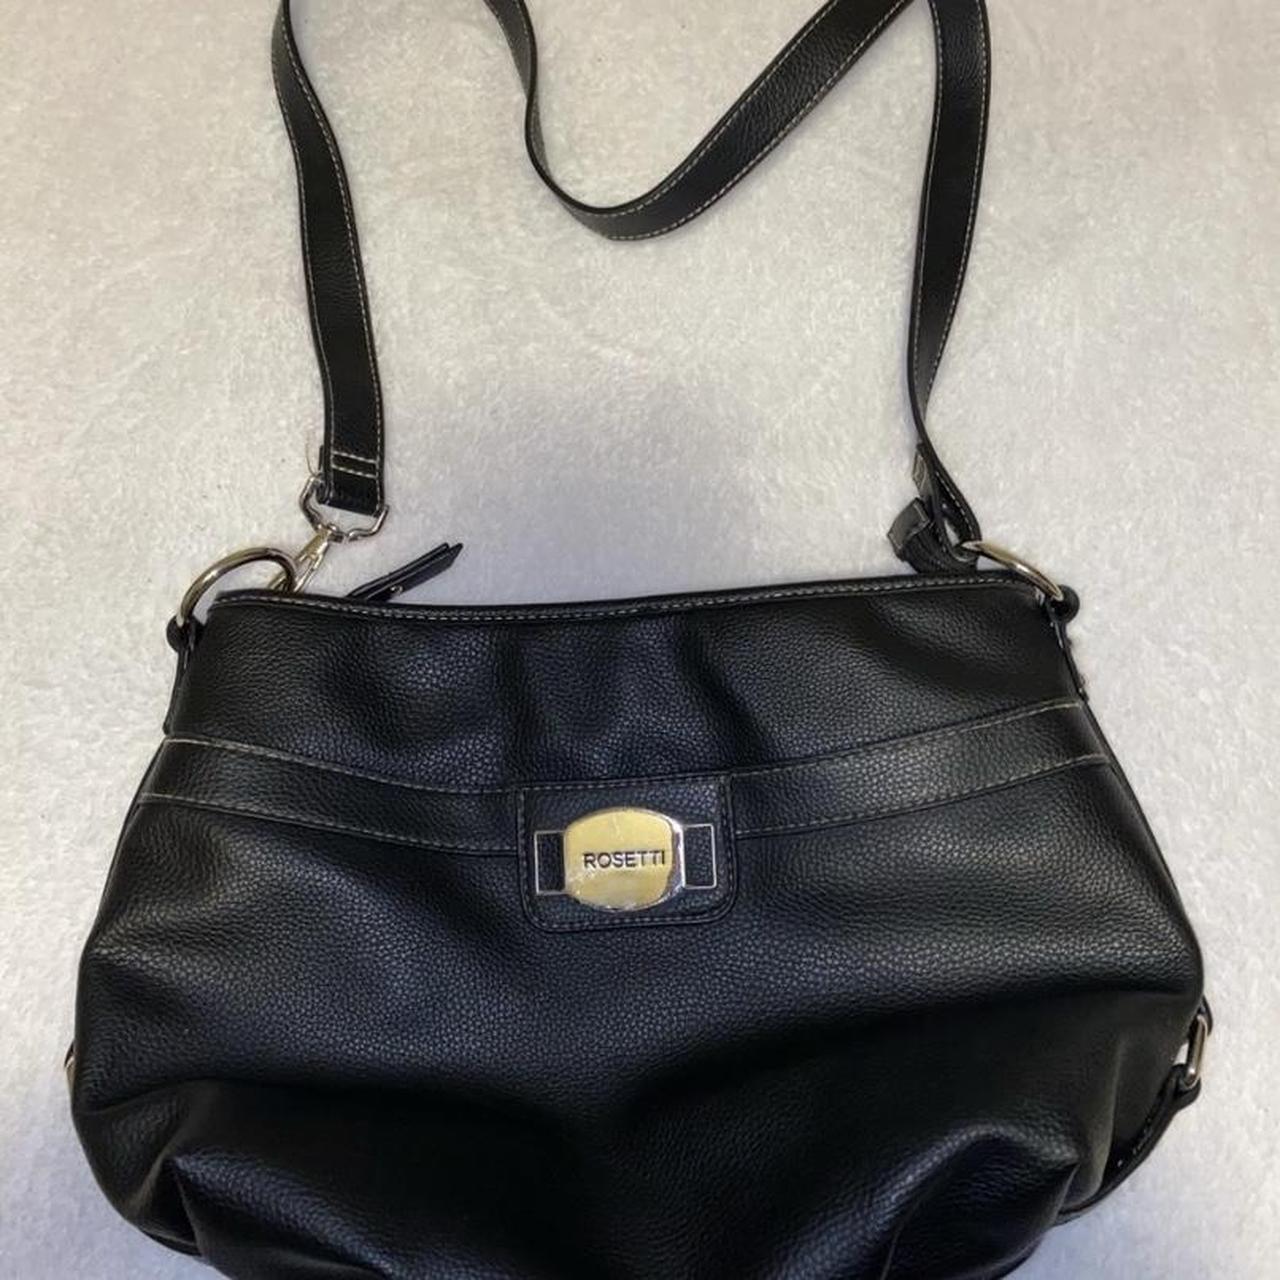 Rosetti purse Brown faux leather handbag with... - Depop